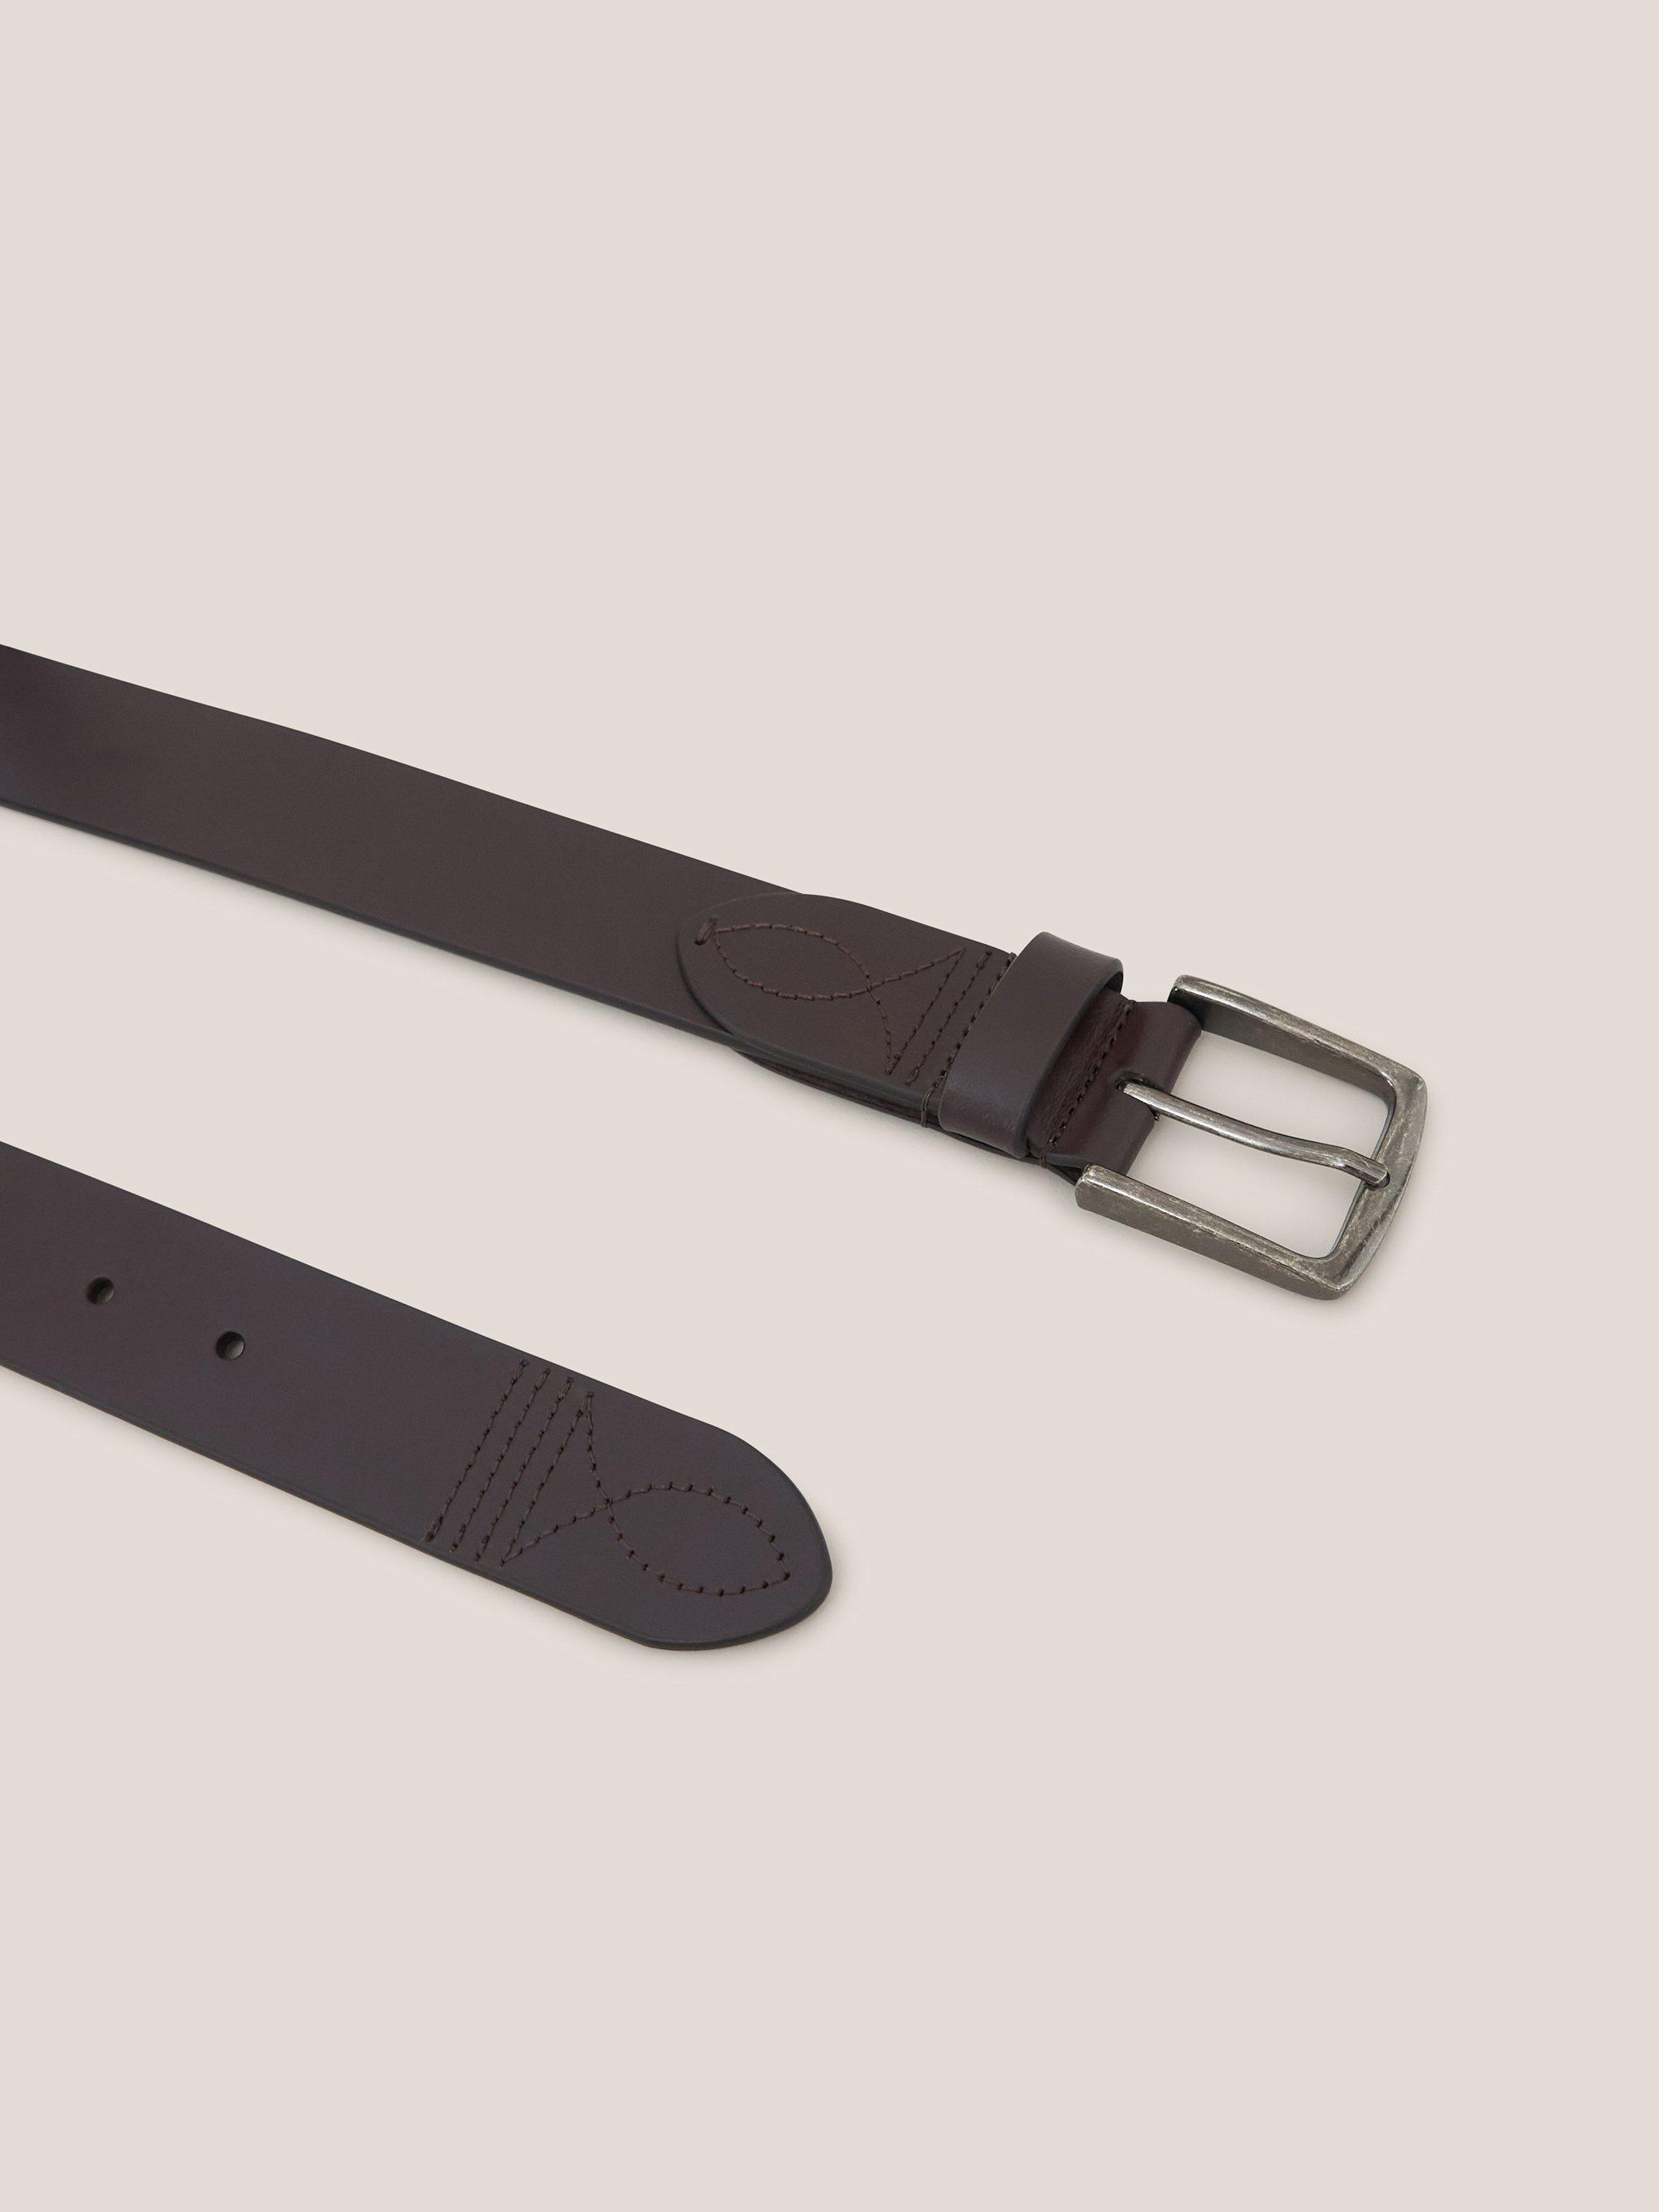 Smart Leather Belt